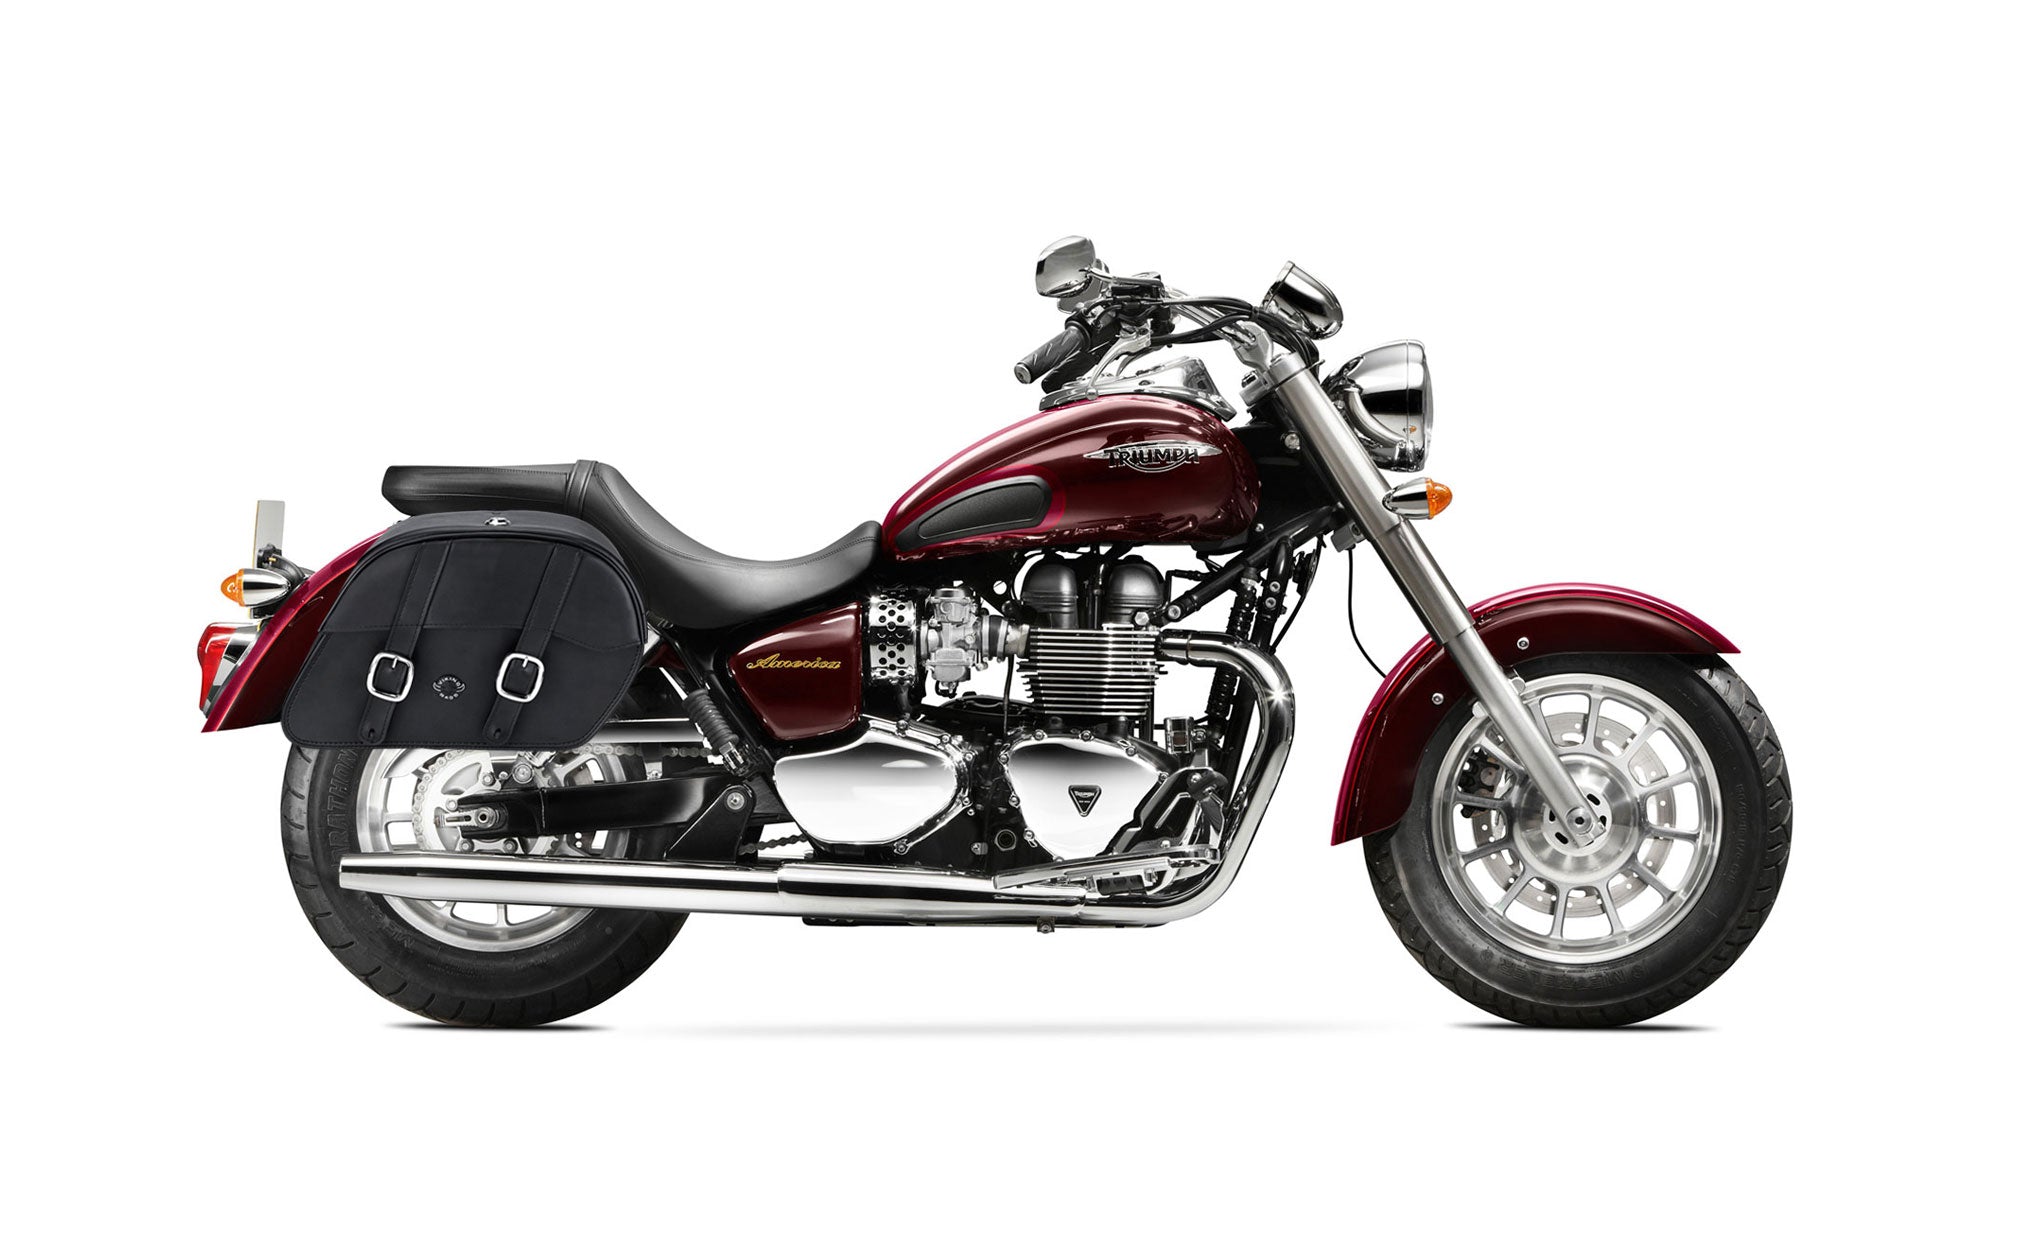 Viking Skarner Large Triumph America Shock Cut Out Leather Motorcycle Saddlebags on Bike Photo @expand